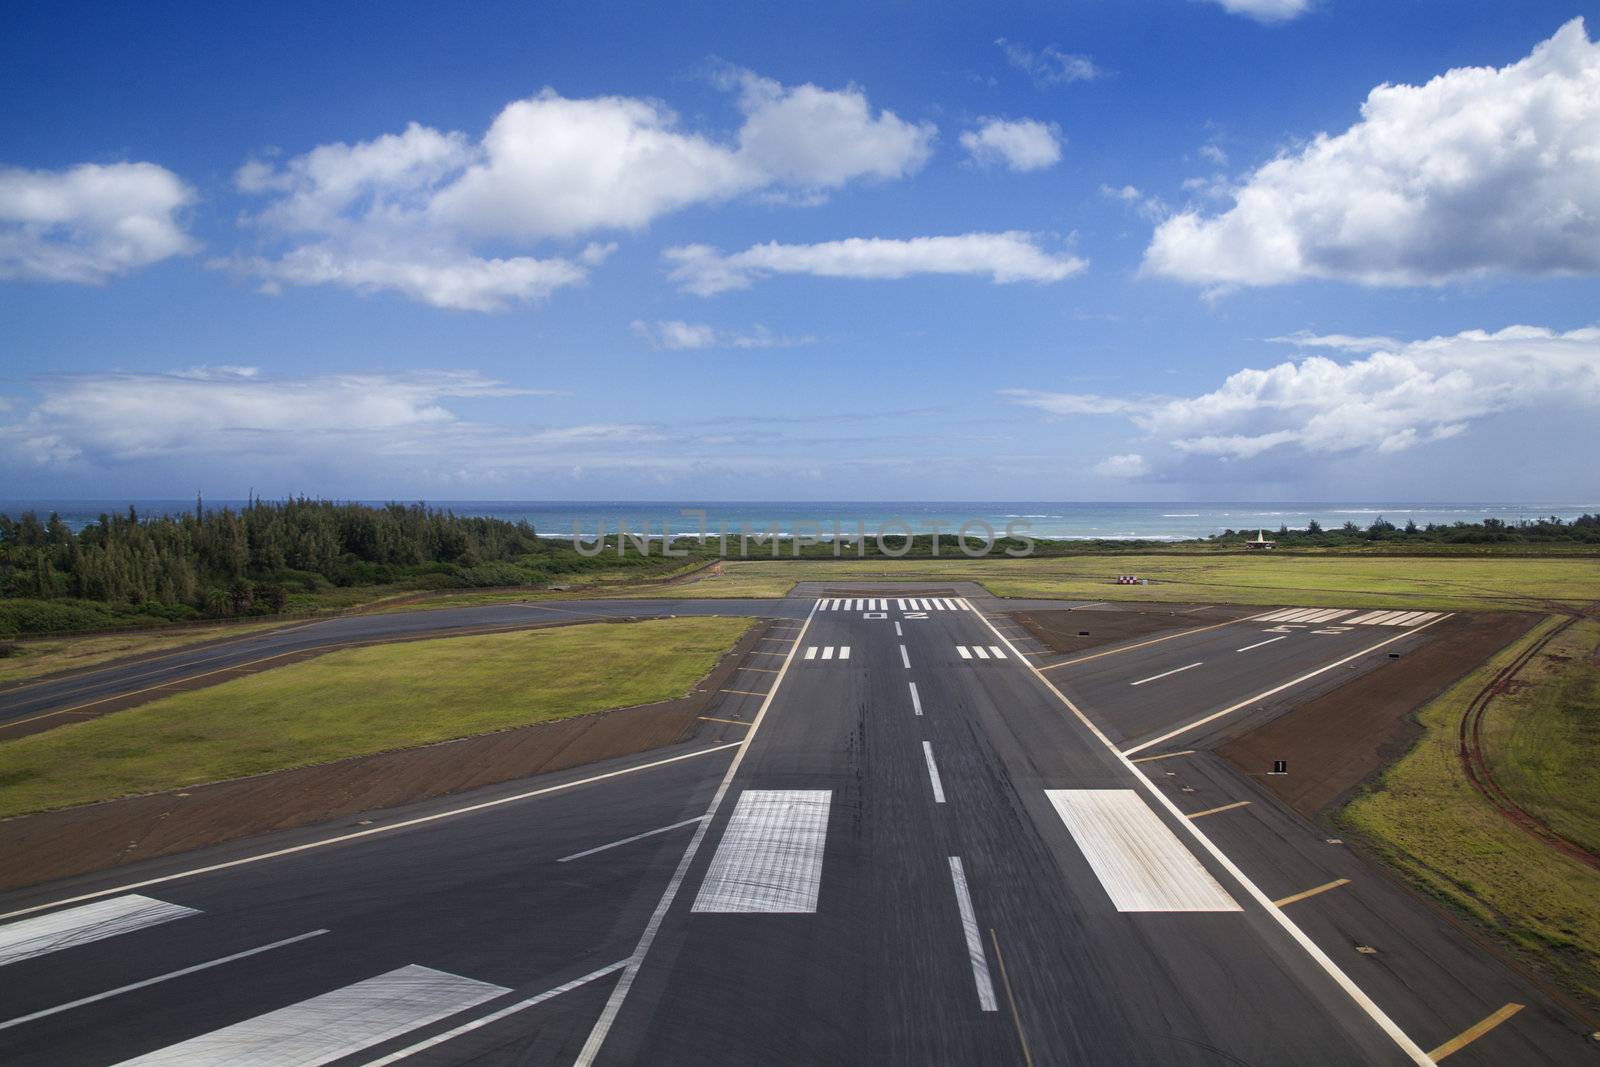 Aerial view of airport runway on coastline of Maui, Hawaii.